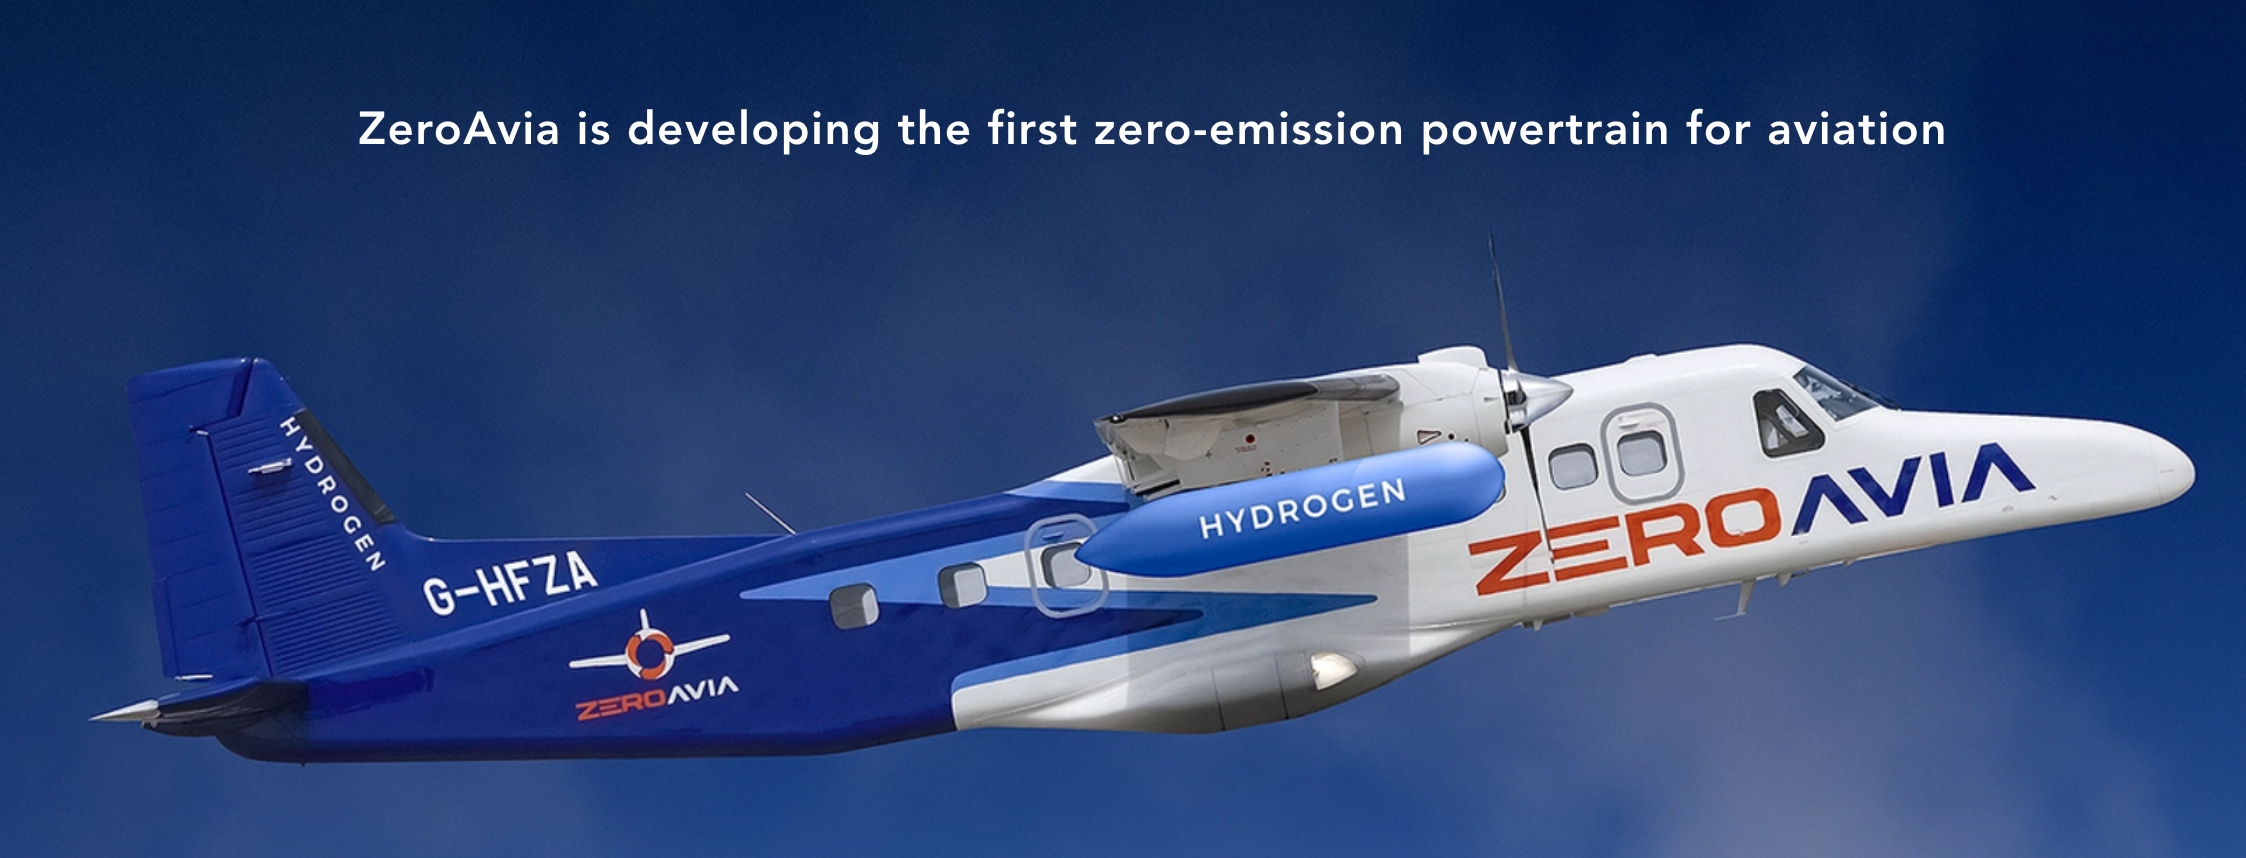 ZeroAvia is developing the first zero-emission powertrain for aviation